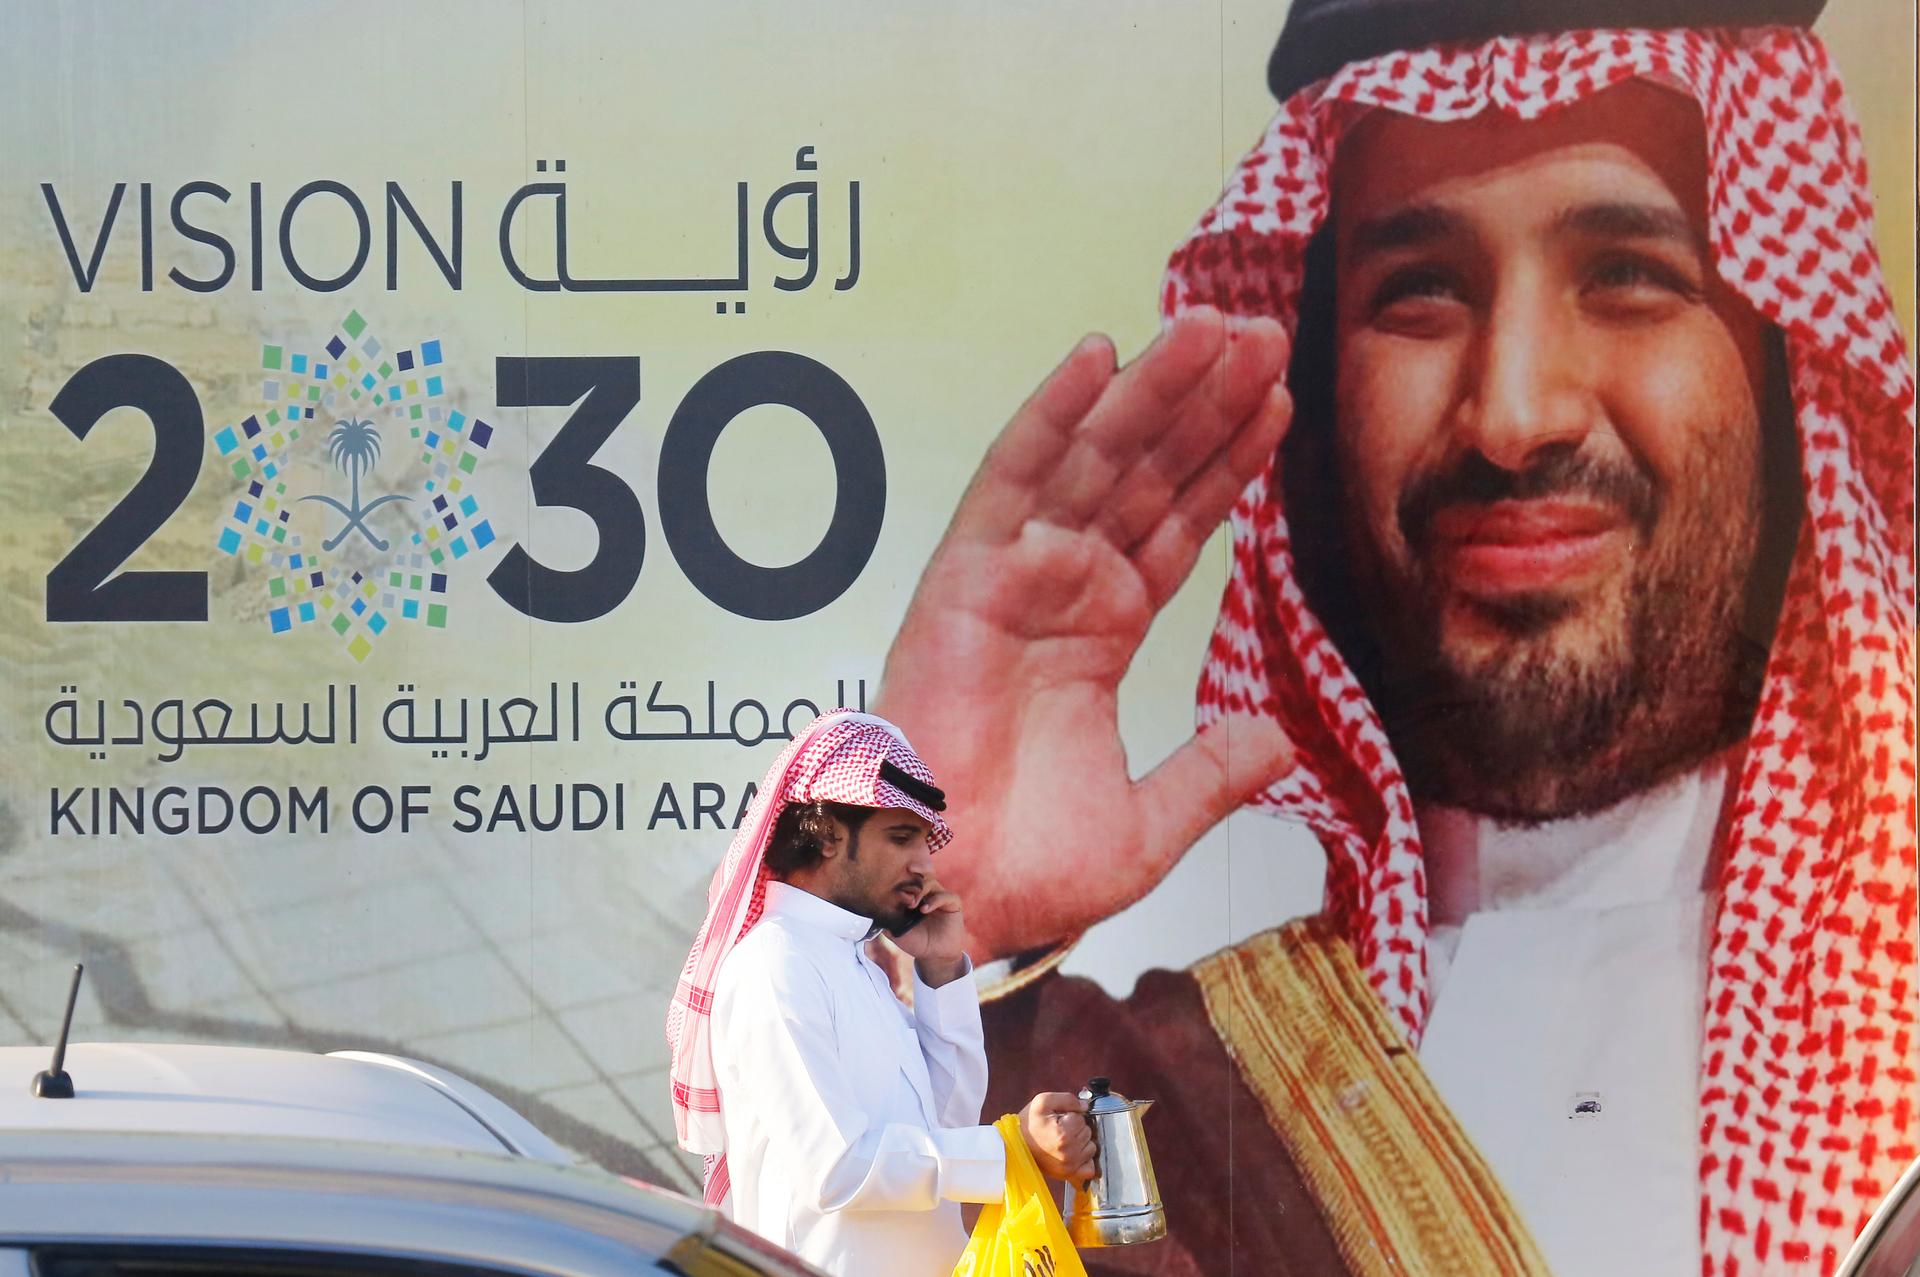 A Saudi man carries his coffee pot as he walks past a banner showing Saudi Crown Prince Mohammed bin Salman, outside a mall in Jiddah, Saudi Arabia, Feb. 5, 2020.